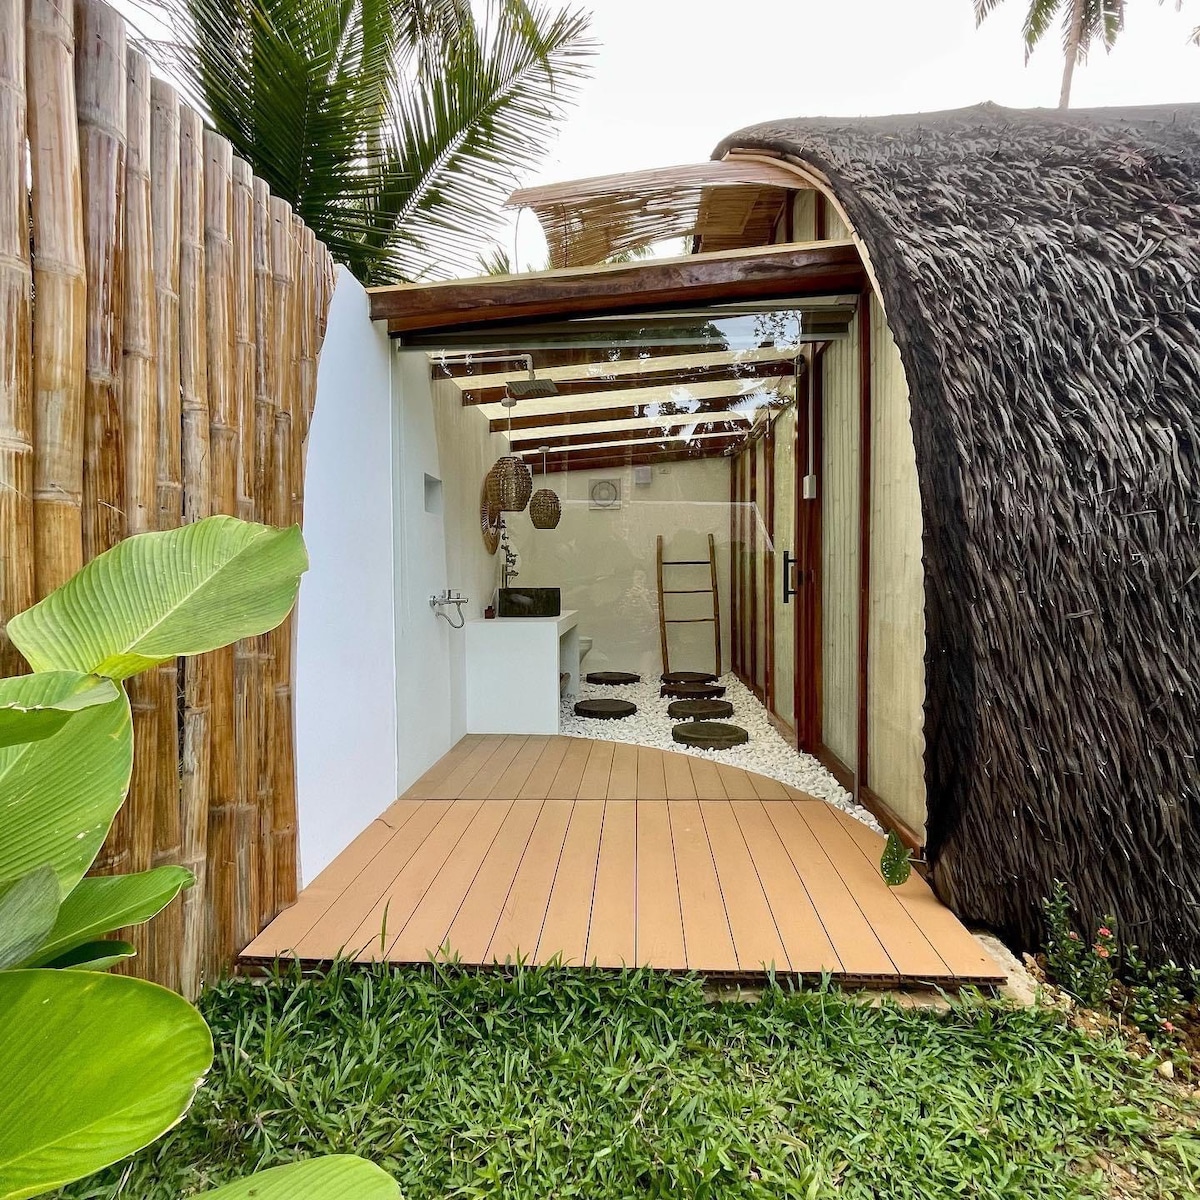 Areca Palm Hut 2是一座穹顶竹屋